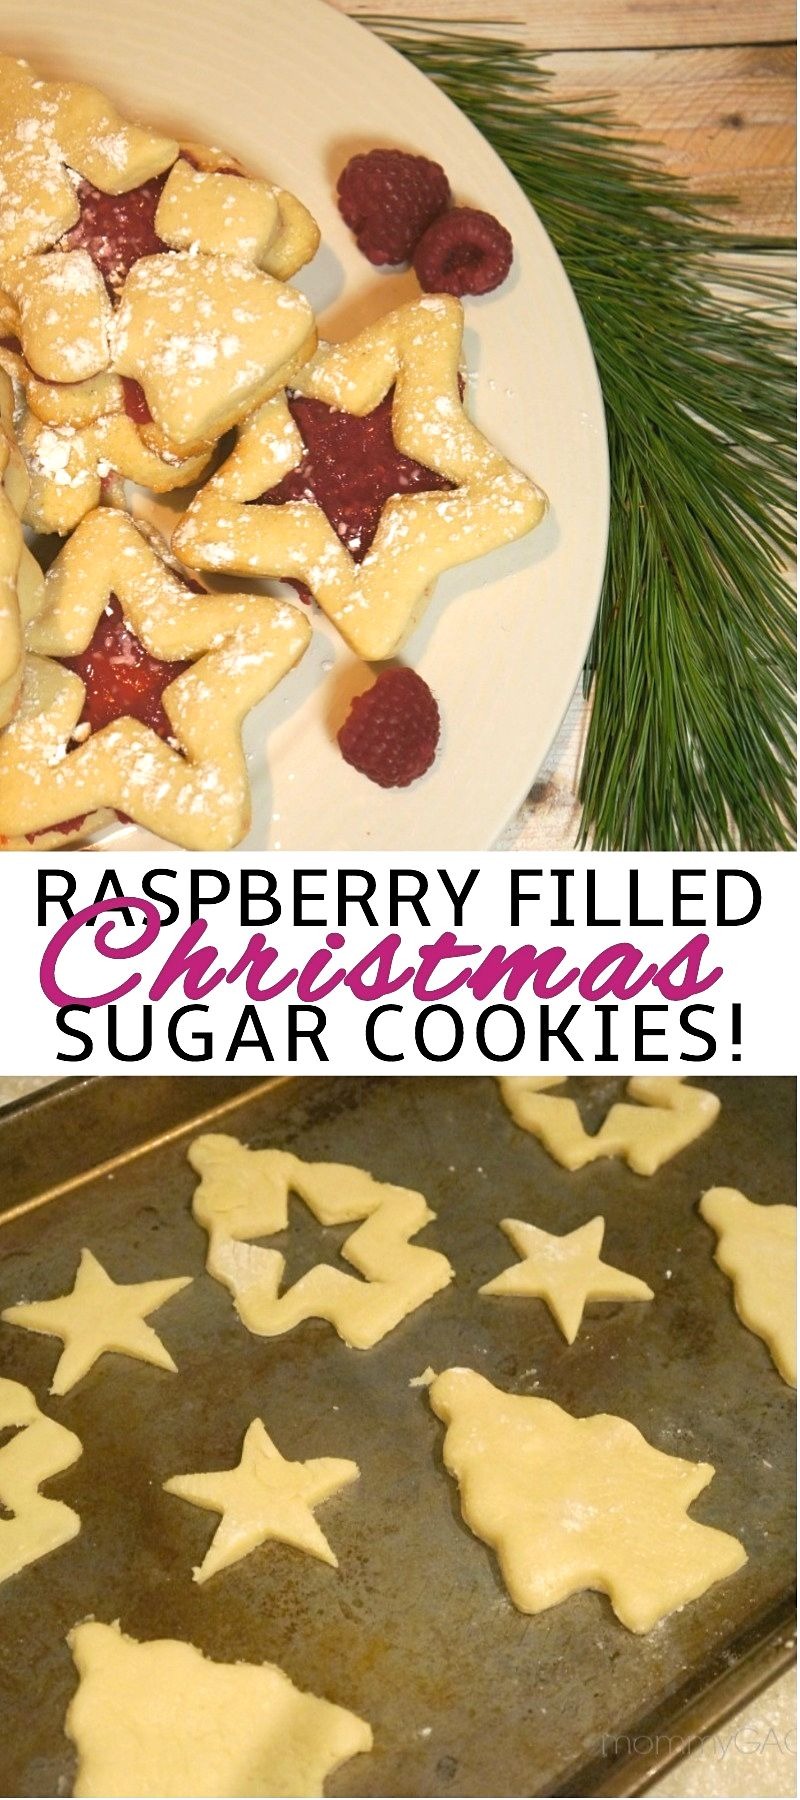 Raspberry Filled Christmas Sugar Cookies - Tasty Holiday Treats!